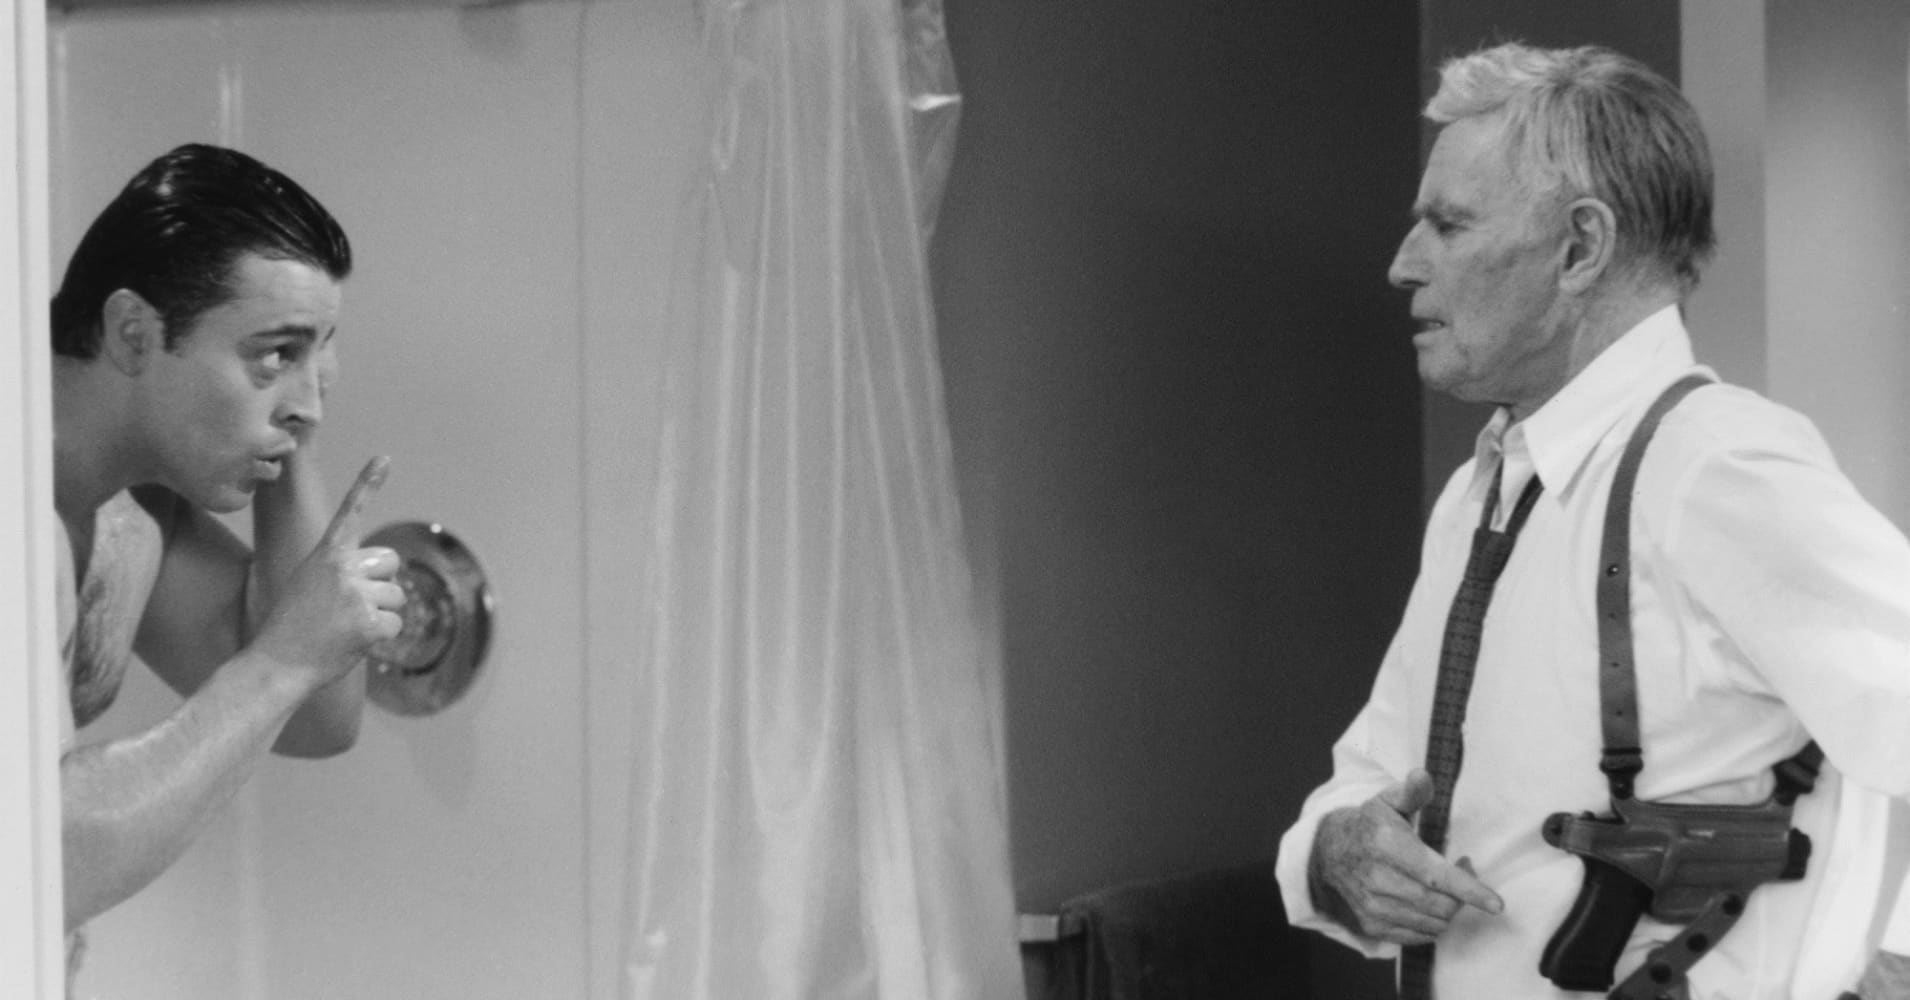 Matt LeBlanc as Joey Tribbiani and Charlton Heston as himself in Episode 14 of Friends.